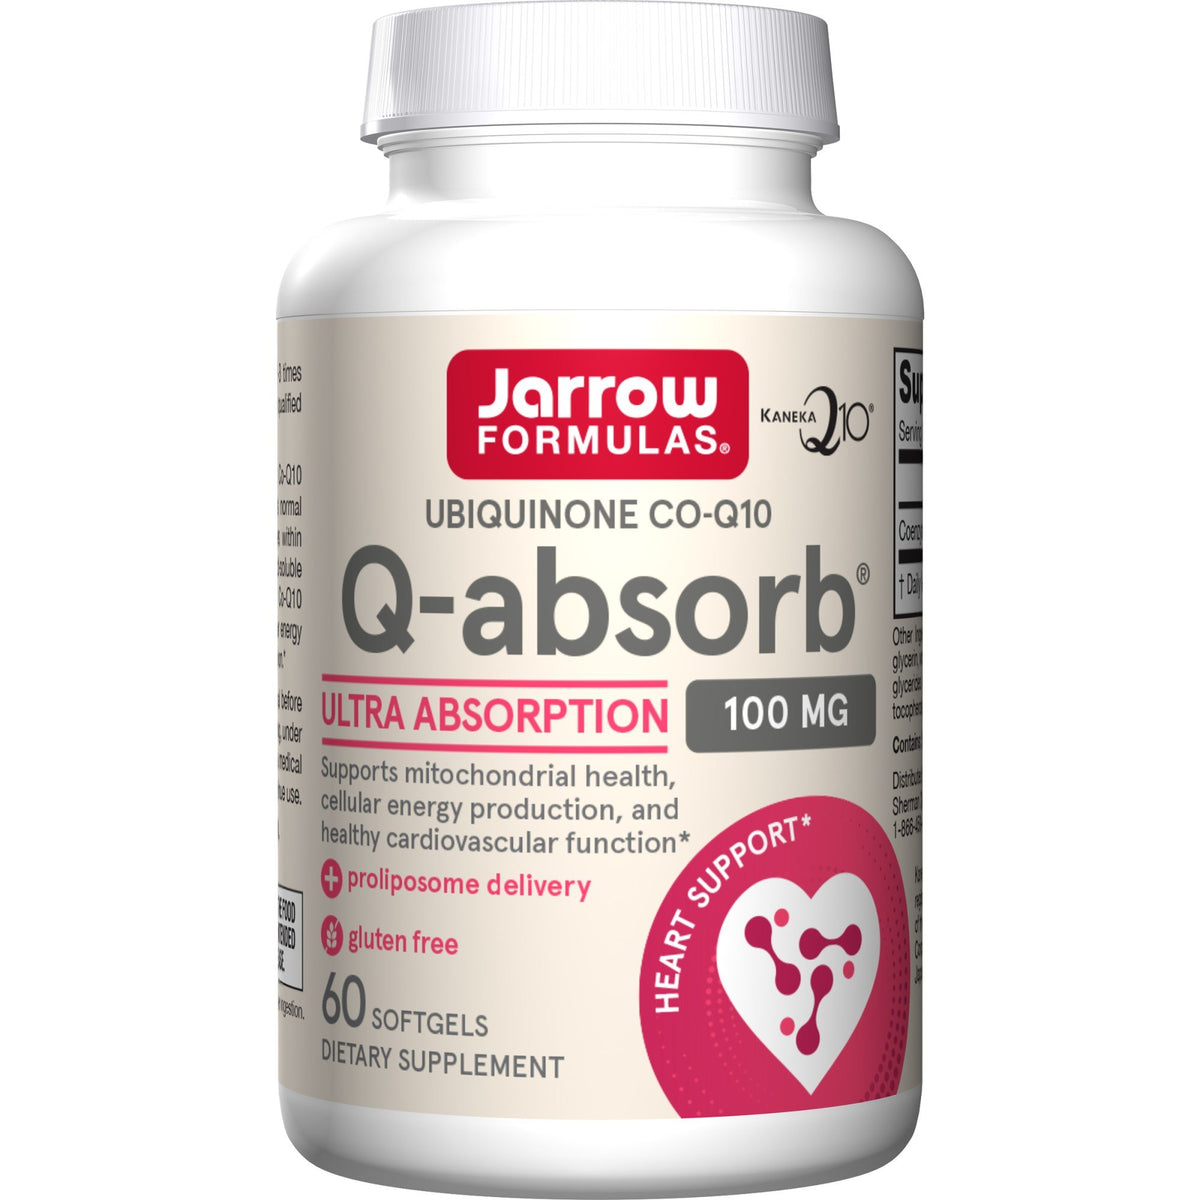 Jarrow Formulas Q-absorb Co-Q10 100mg 60 Softgel